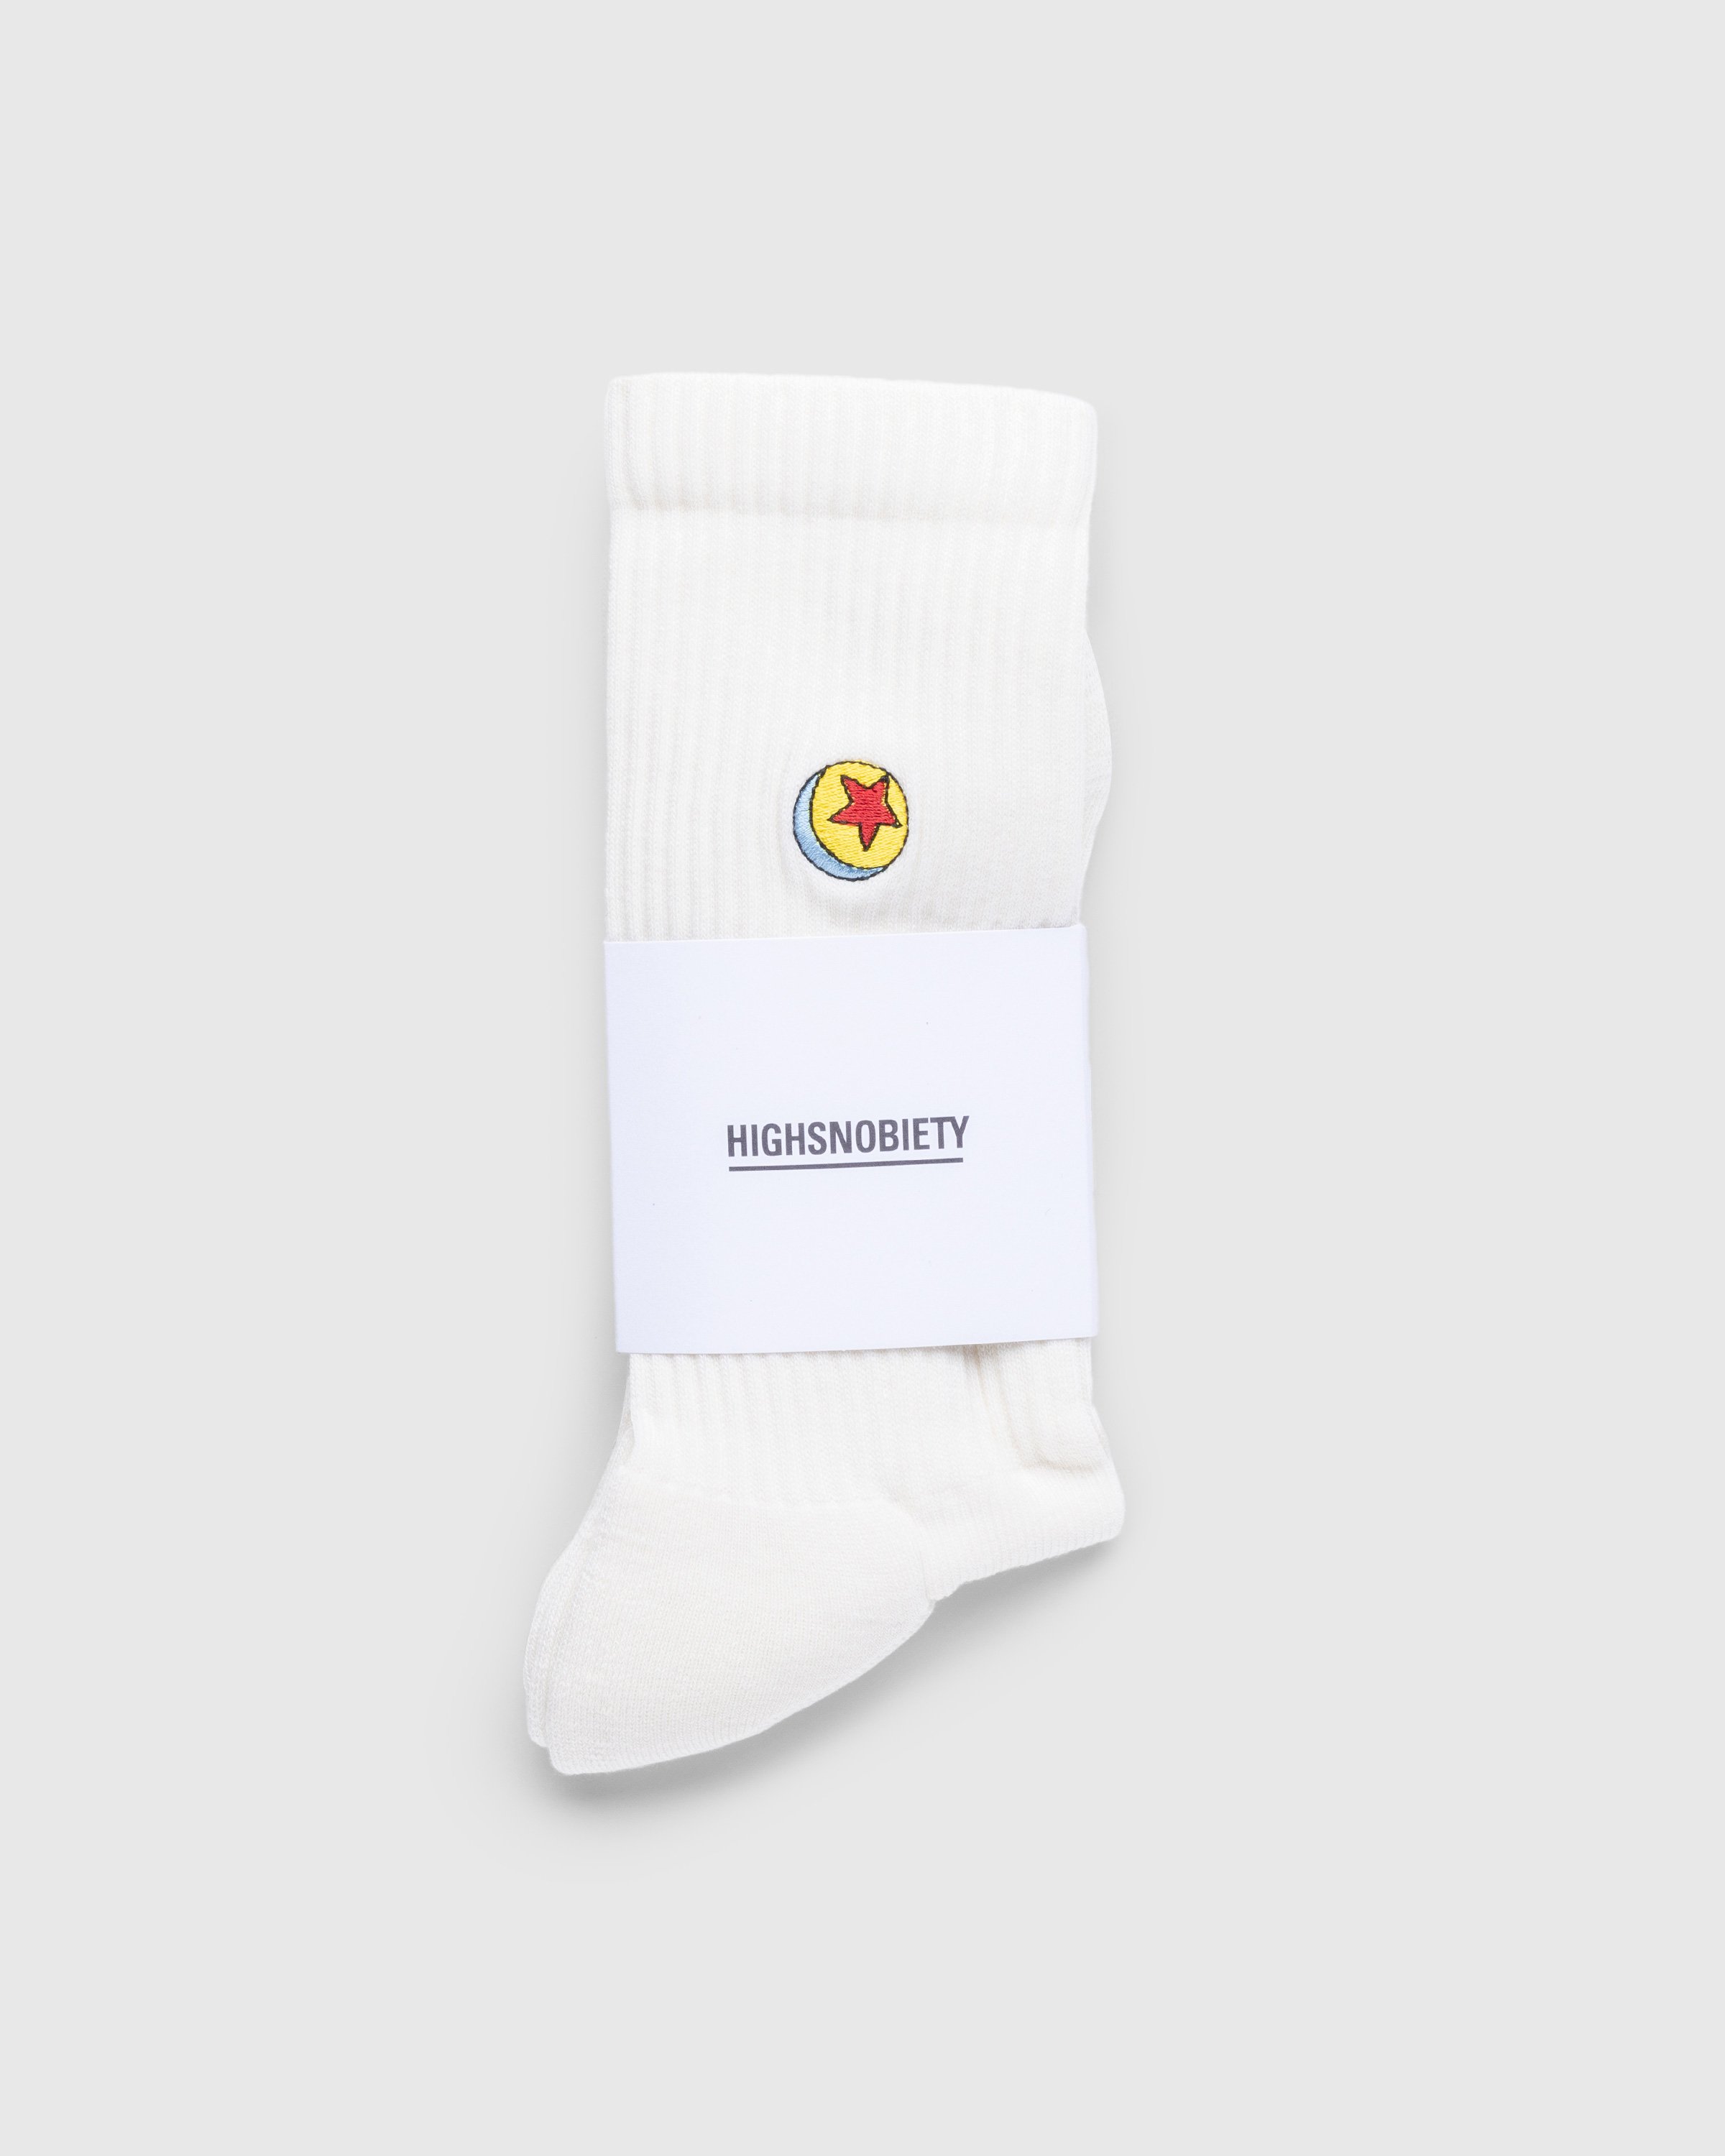 Highsnobiety x Pixar - Socks White  - Accessories - Light Grey - Image 3